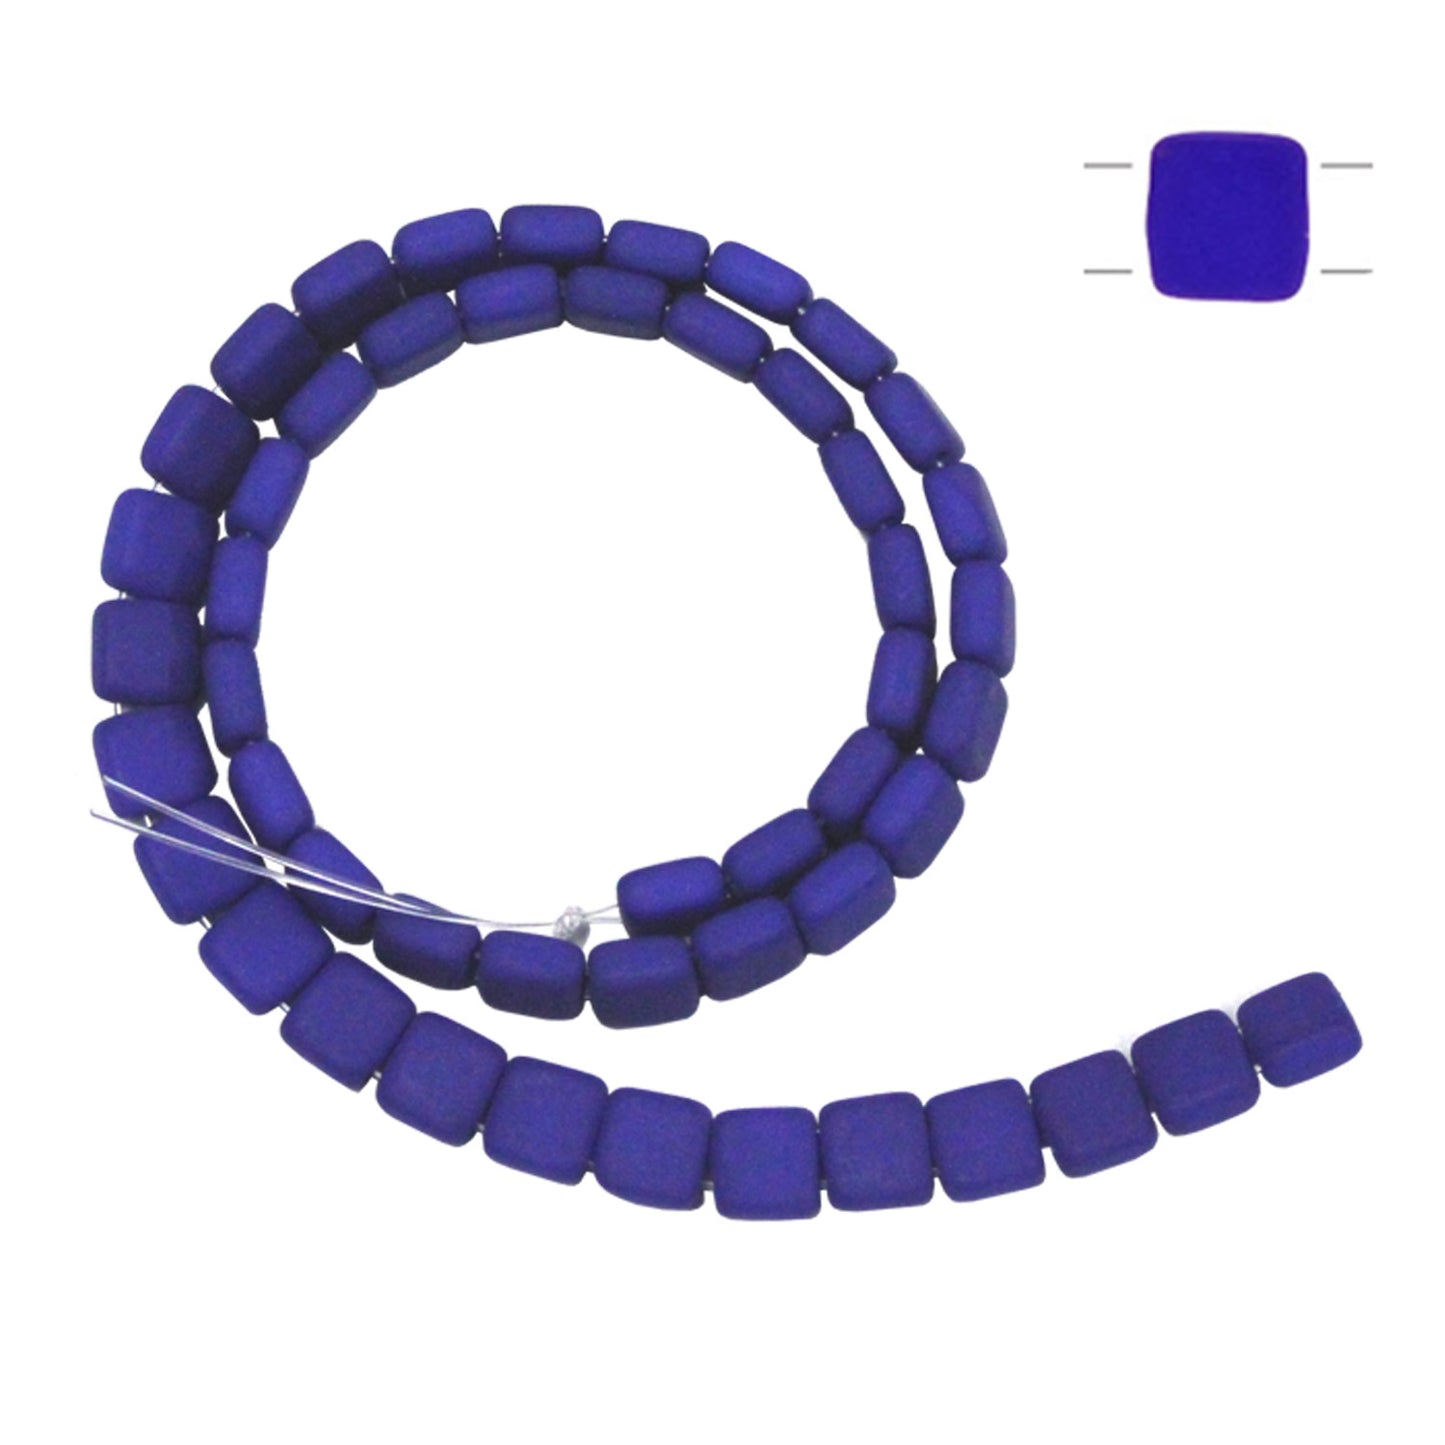 6mm Neon Blue / 2 Hole CzechMates Tile Beads / 50 Bead Strand